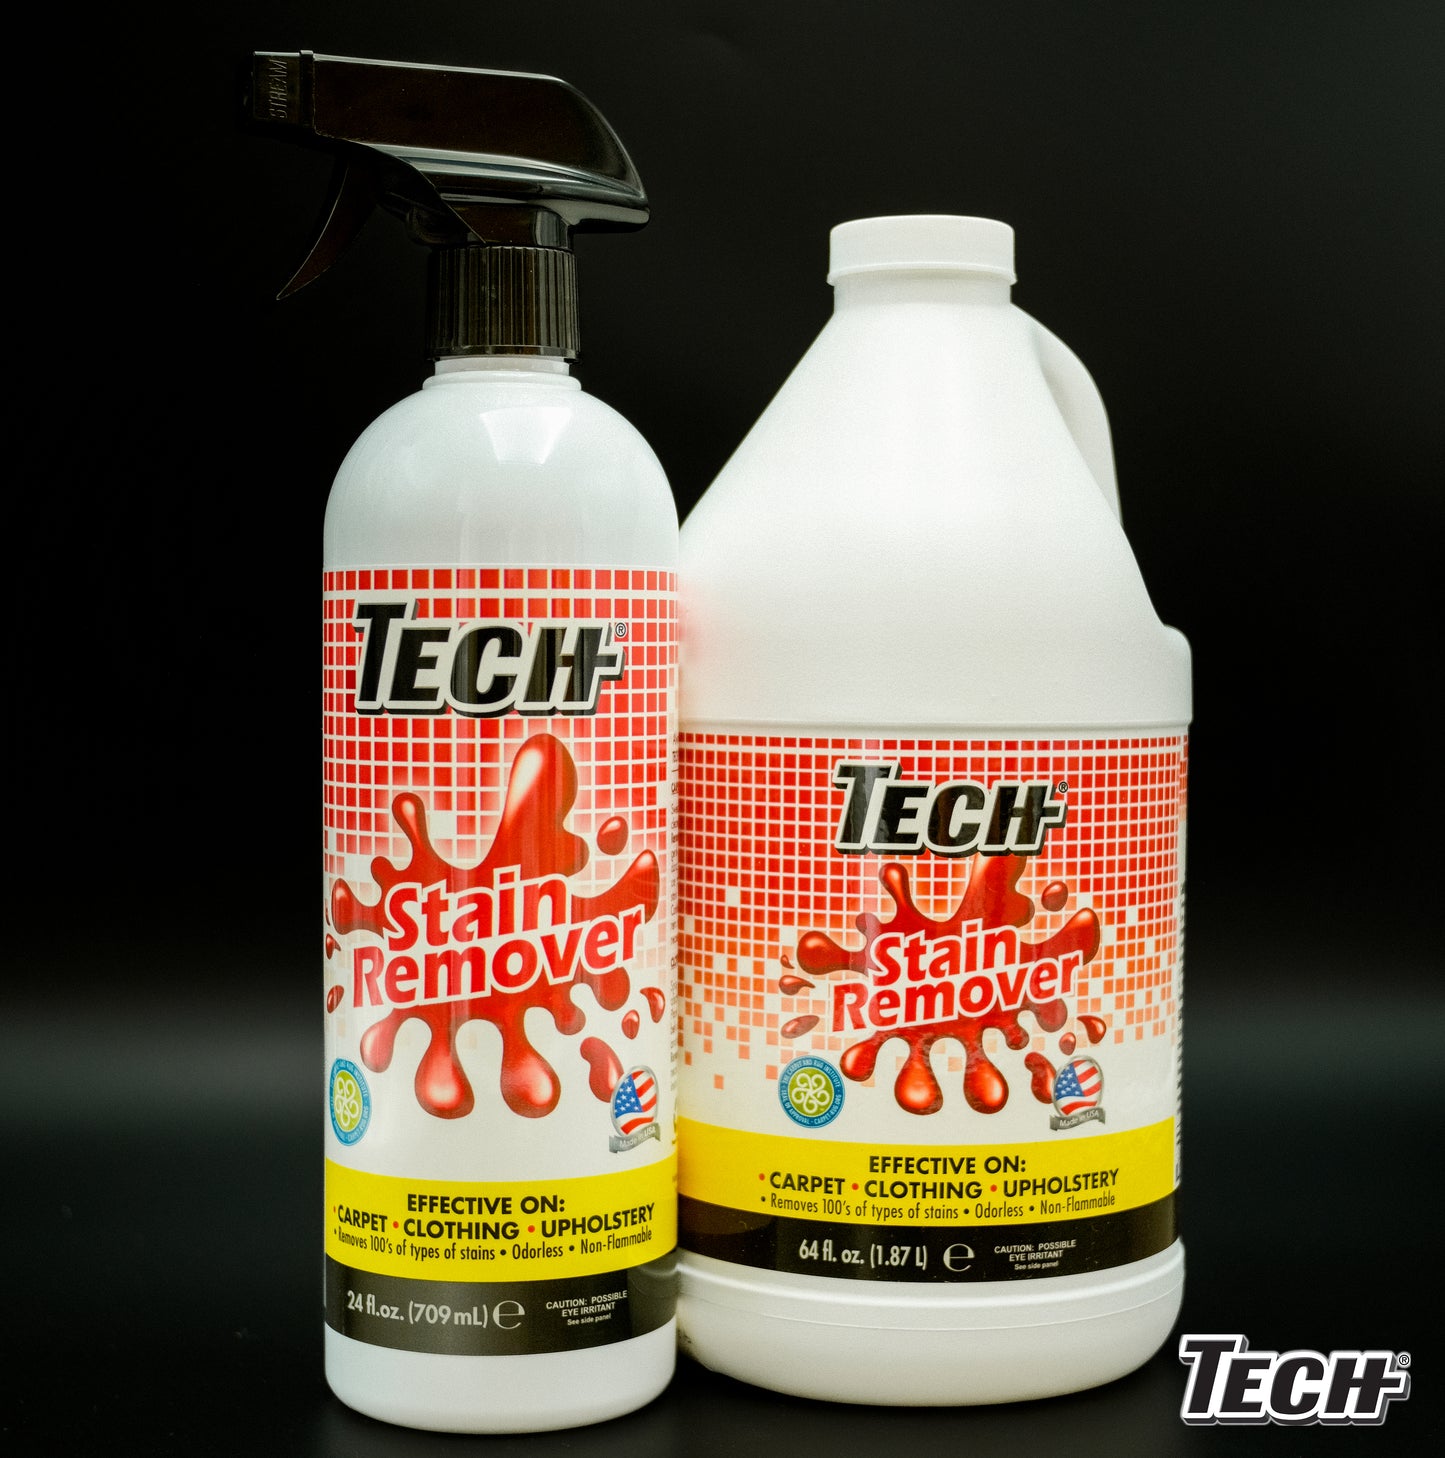 TECH Stain Remover 88 oz Bonus Pack (64 oz bottle + 24 oz Spray Bottle) - Effective Stain Remover Spray for Carpet, Clothing, Laundry, Upholstery and Other Washable Fabrics